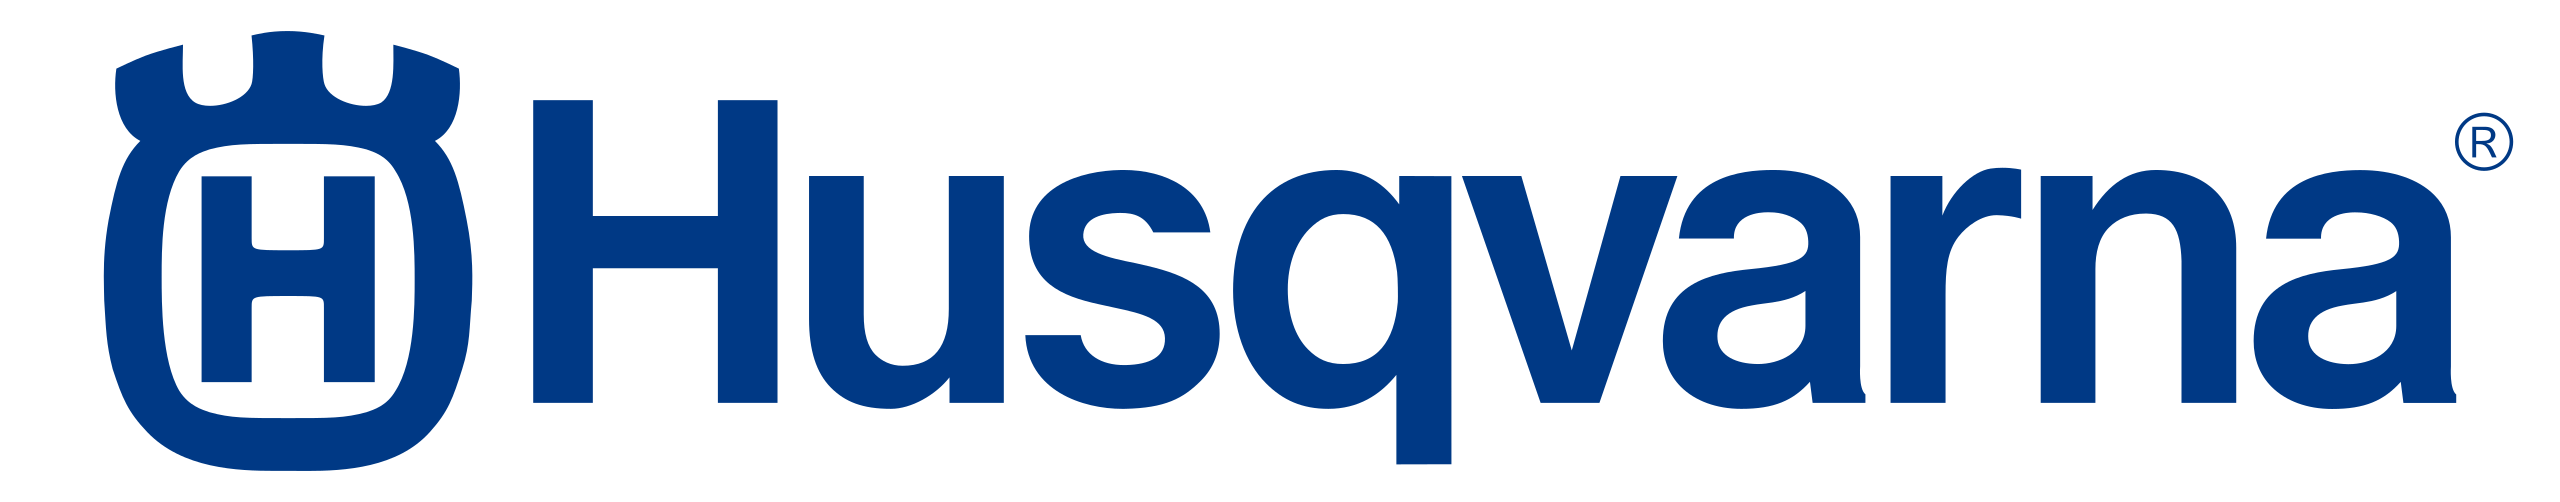 Archivo:Husqvarna logo.svg - Wikipedia, la enciclopedia libre